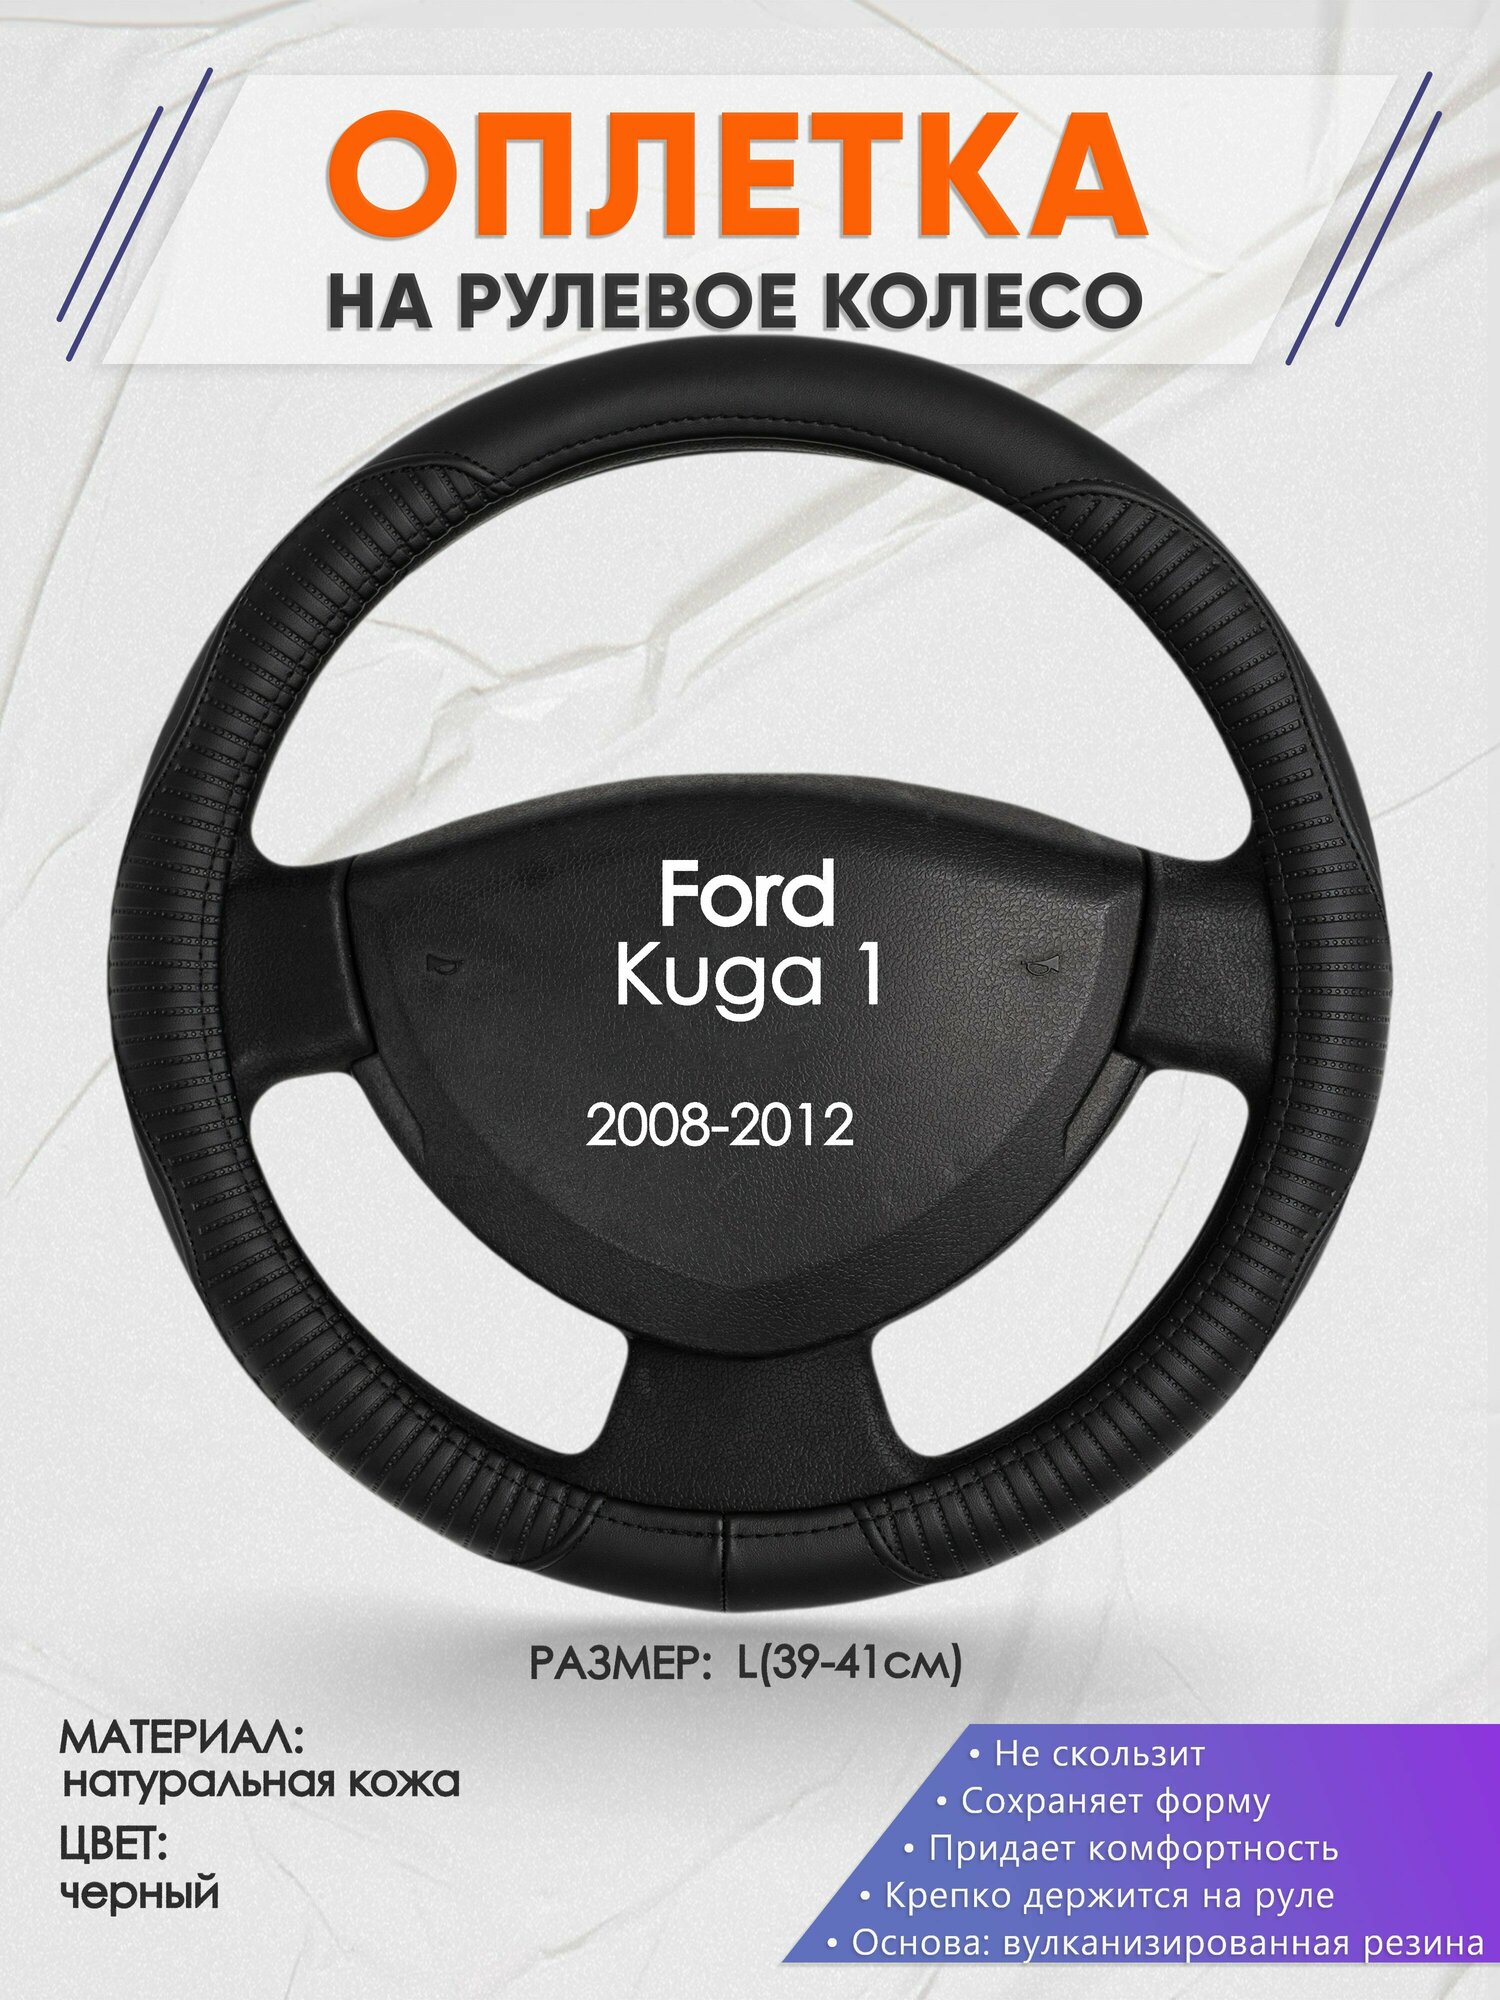 Оплетка на руль для Ford Kuga 1(Форд Куга 1) 2008-2012, L(39-41см), Натуральная кожа 22